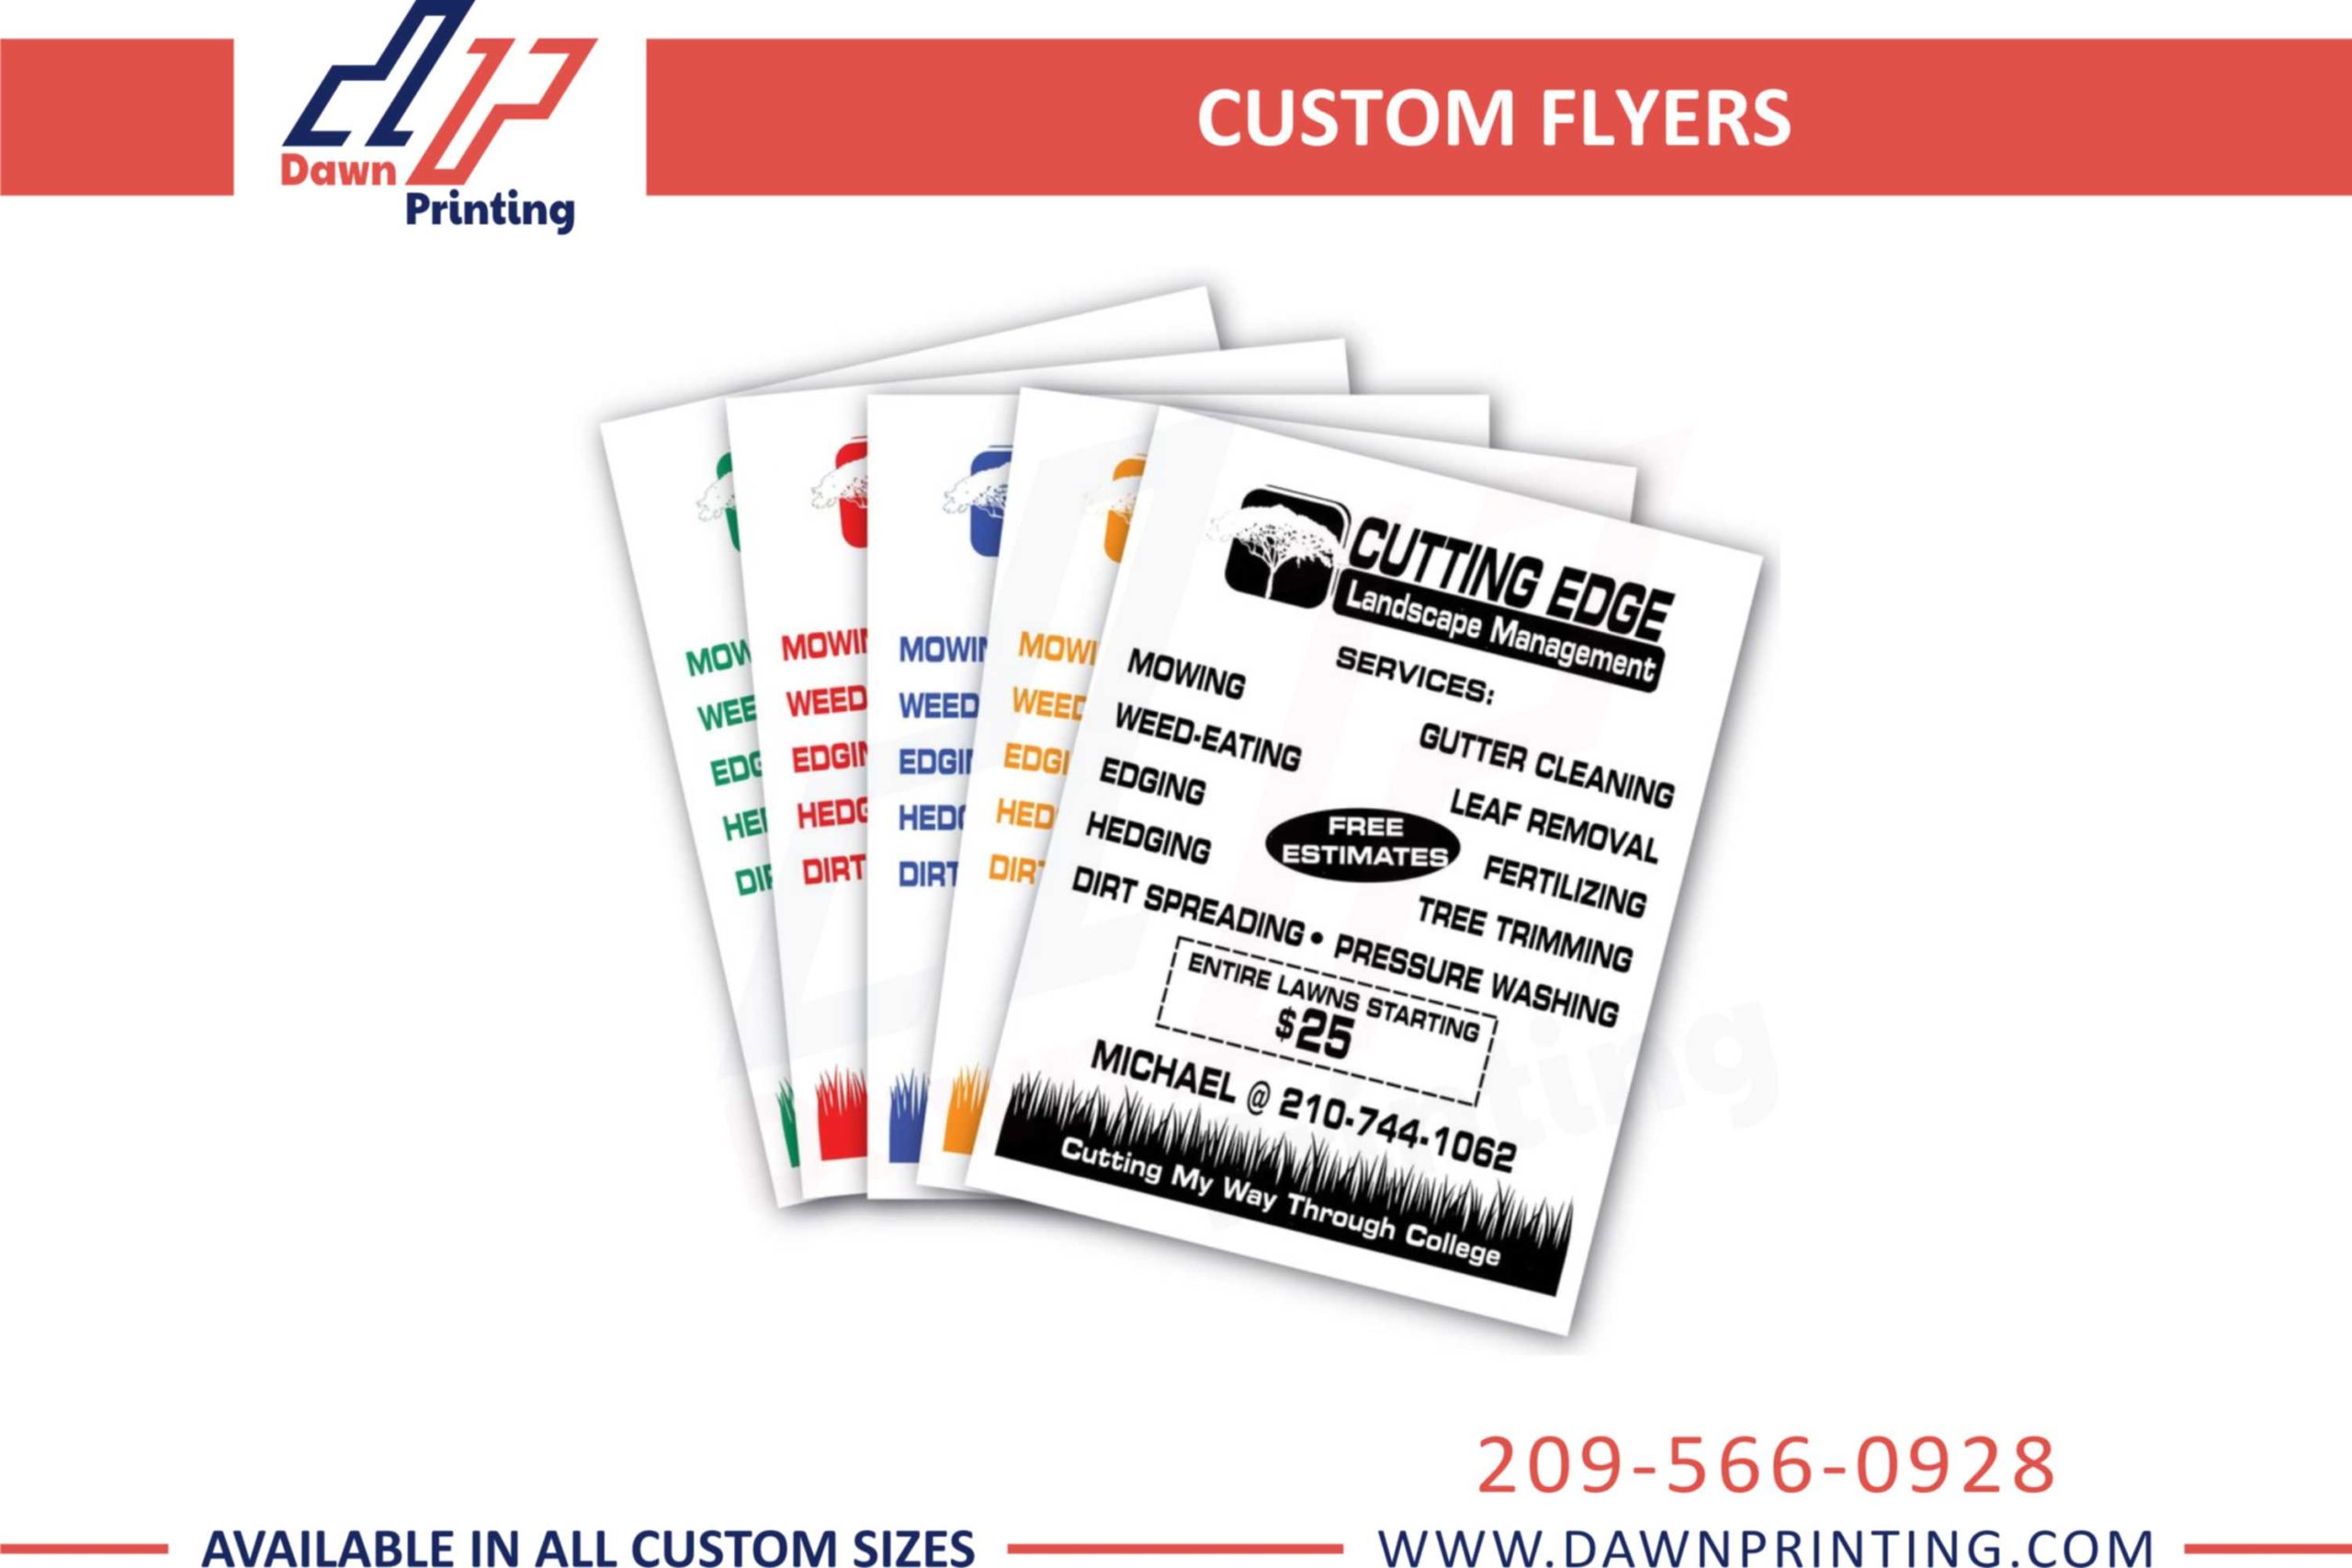 Creative Custom Flyers - Dawn Printing